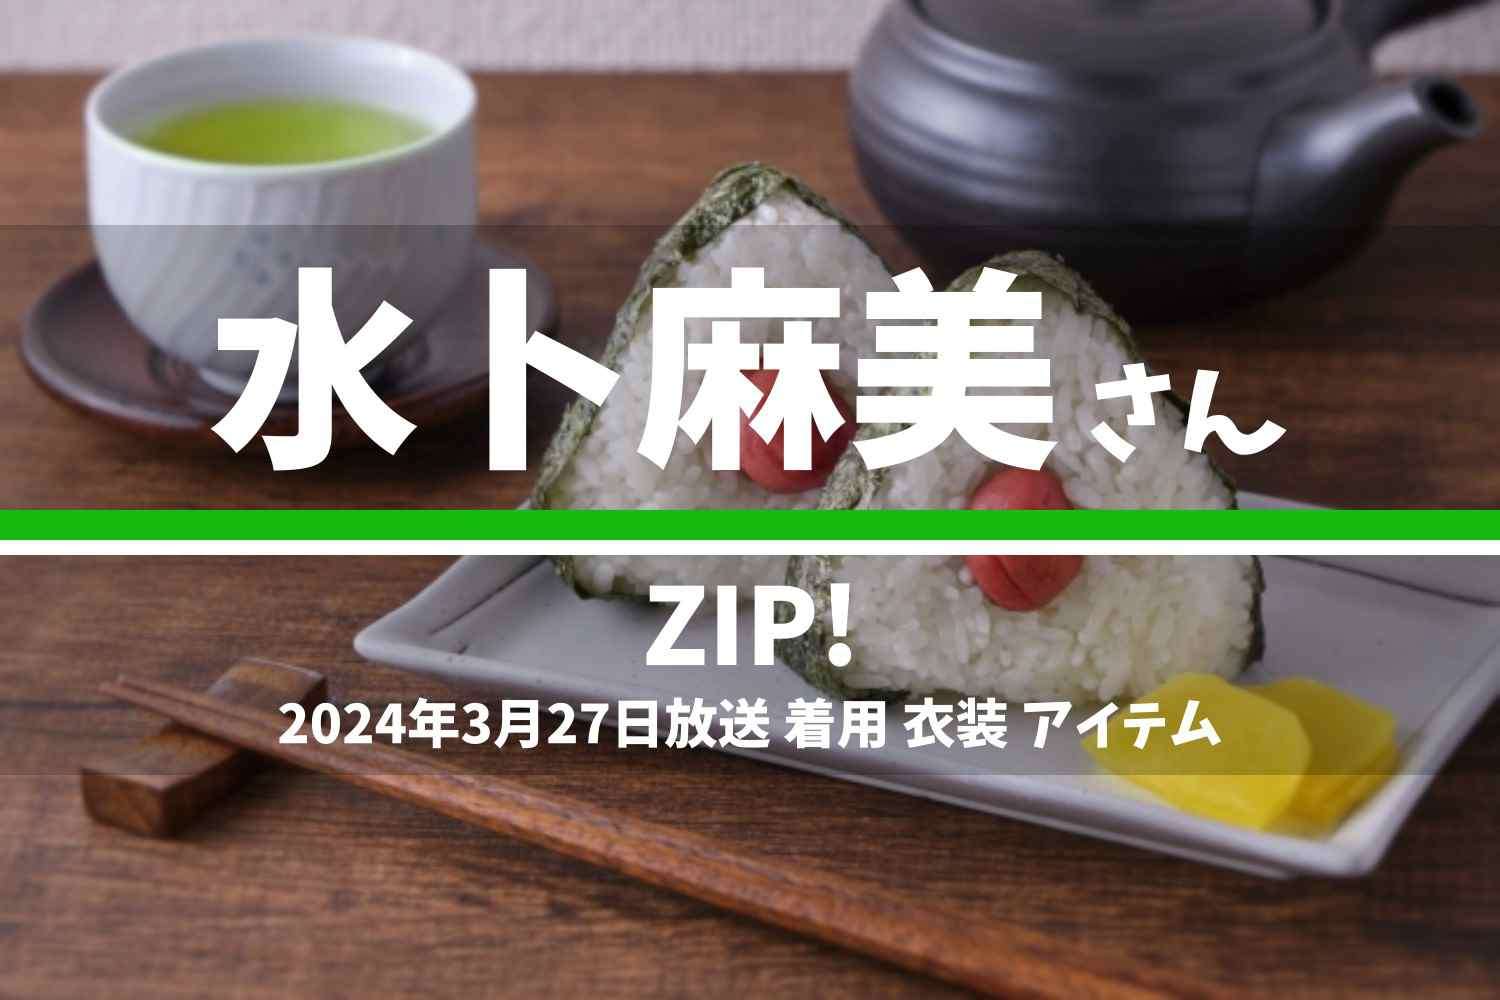 ZIP! 水卜麻美さん 番組 衣装 2024年3月27日放送